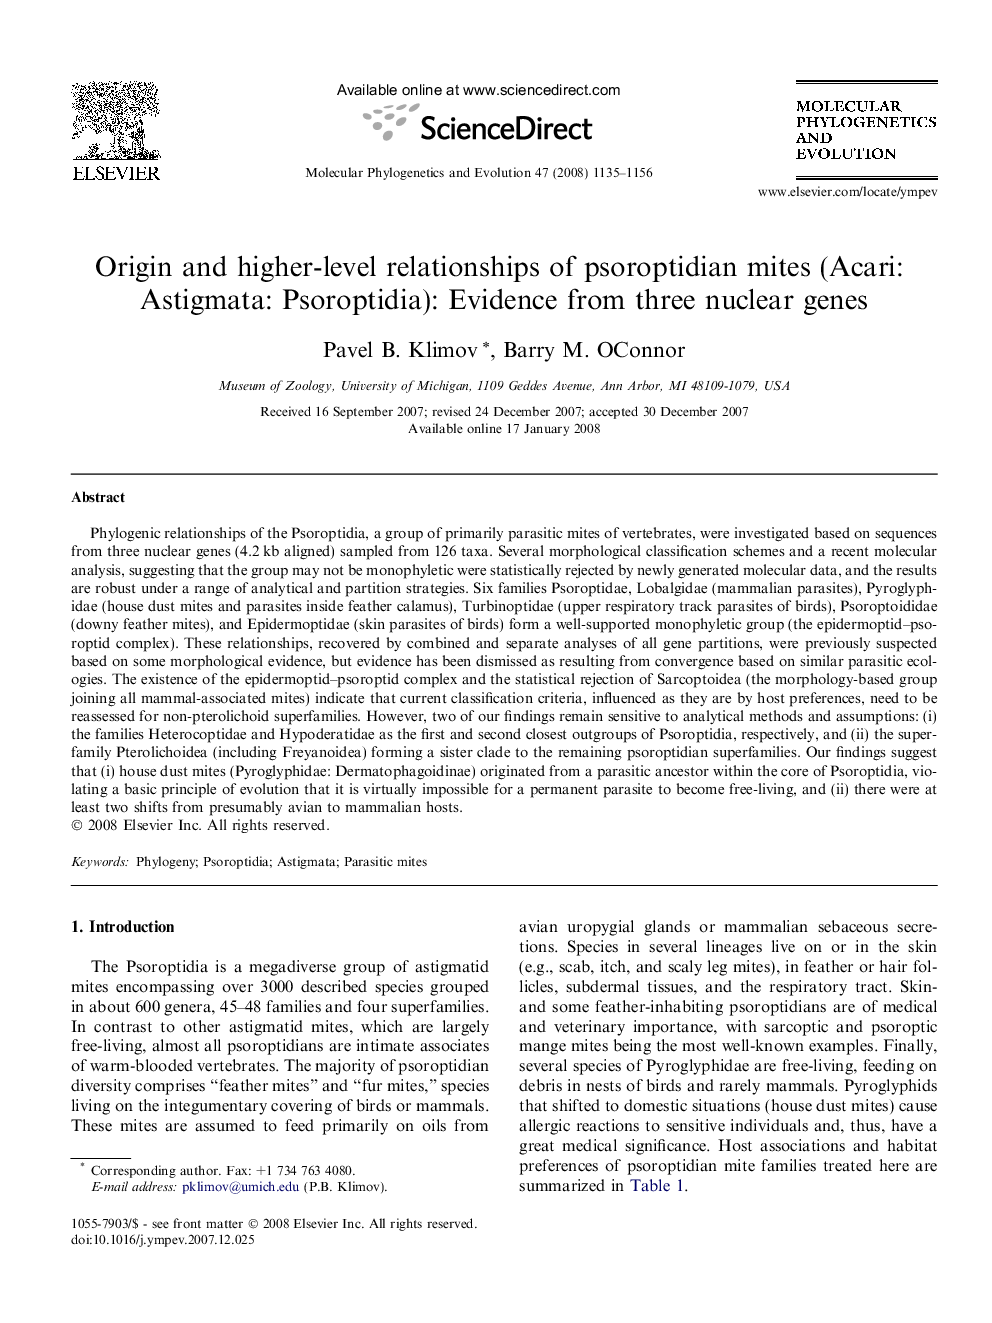 Origin and higher-level relationships of psoroptidian mites (Acari: Astigmata: Psoroptidia): Evidence from three nuclear genes